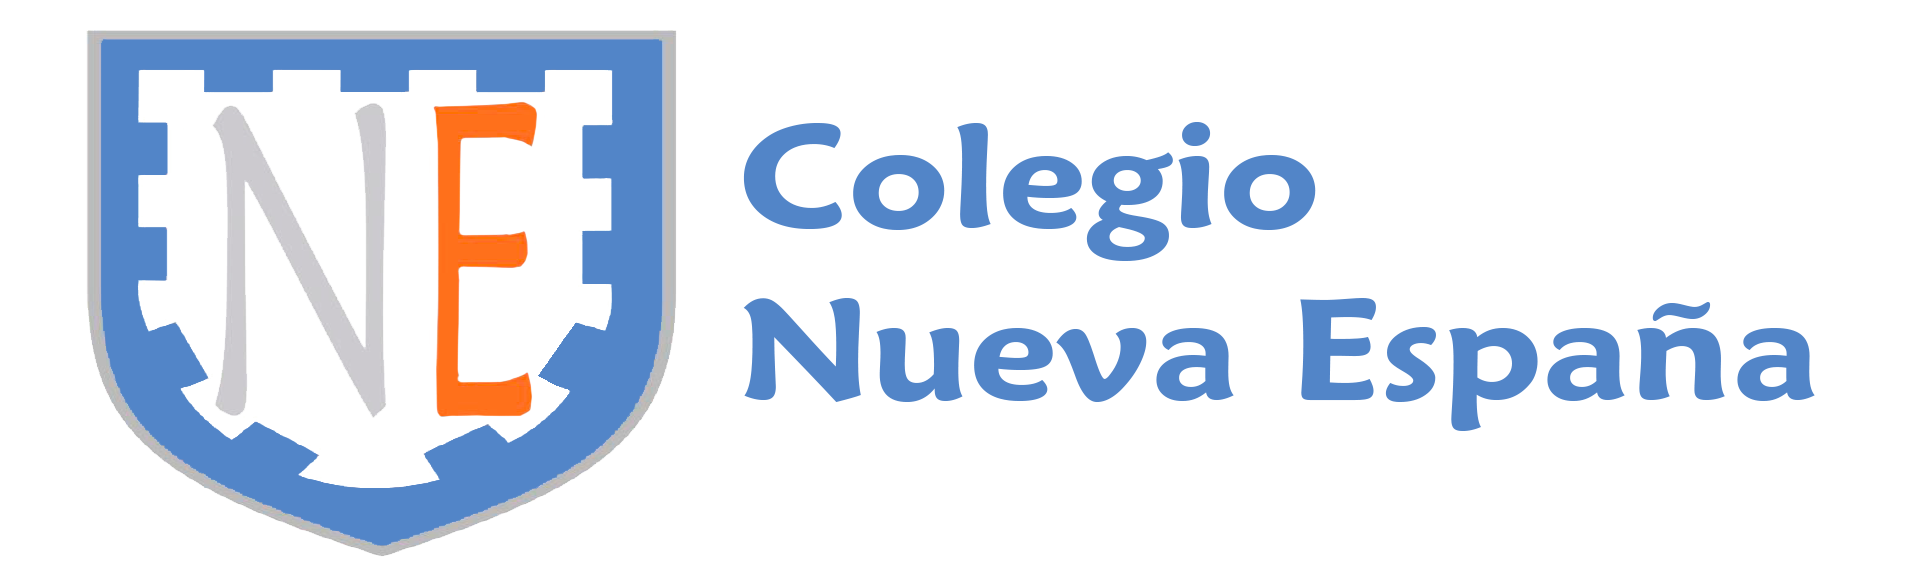 Colegio Nueva Espaa